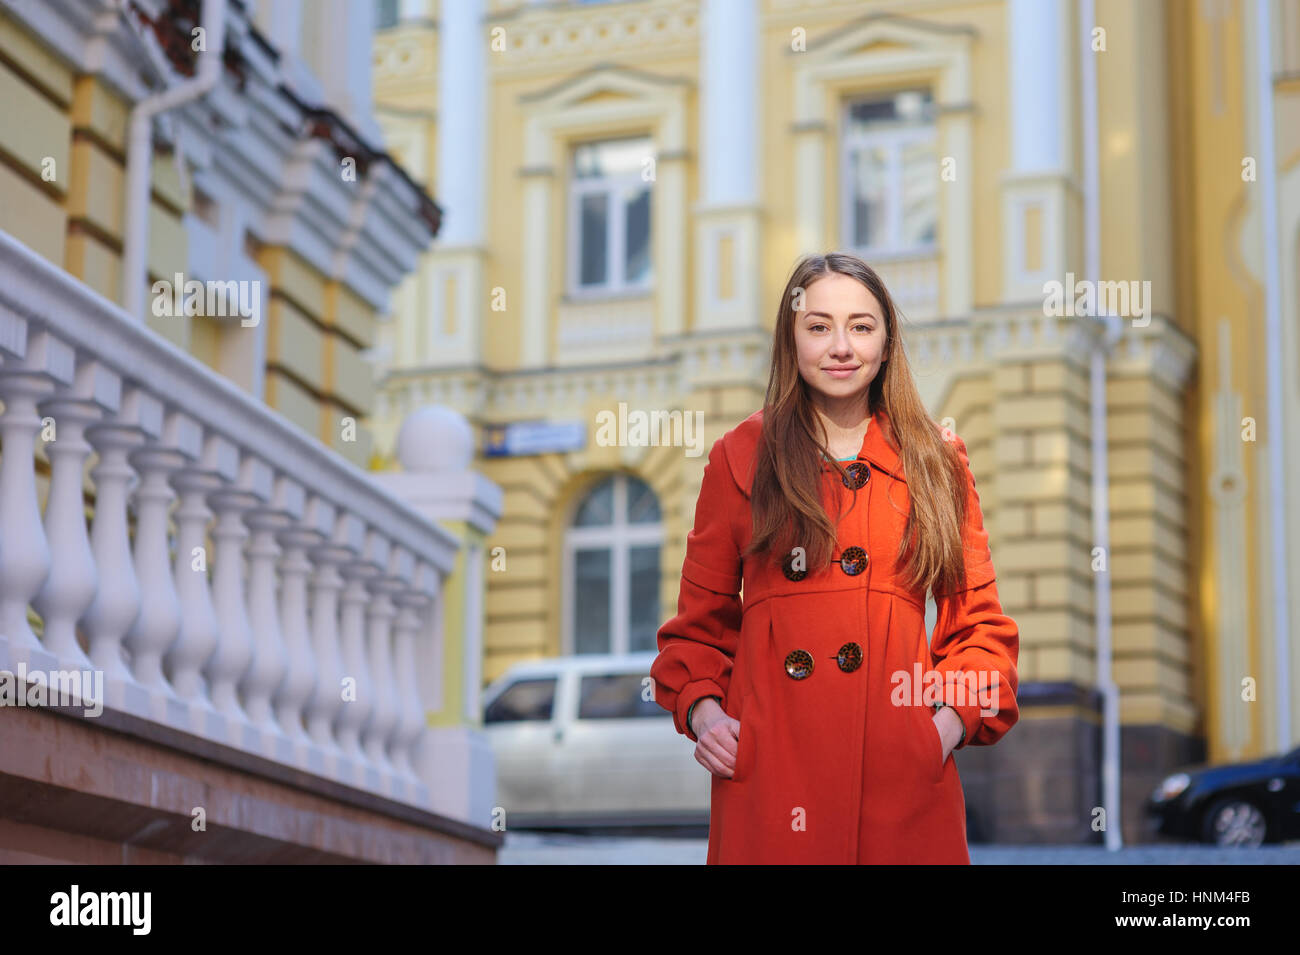 junge Frau in orange Mantel posiert in der Altstadt Stockfoto